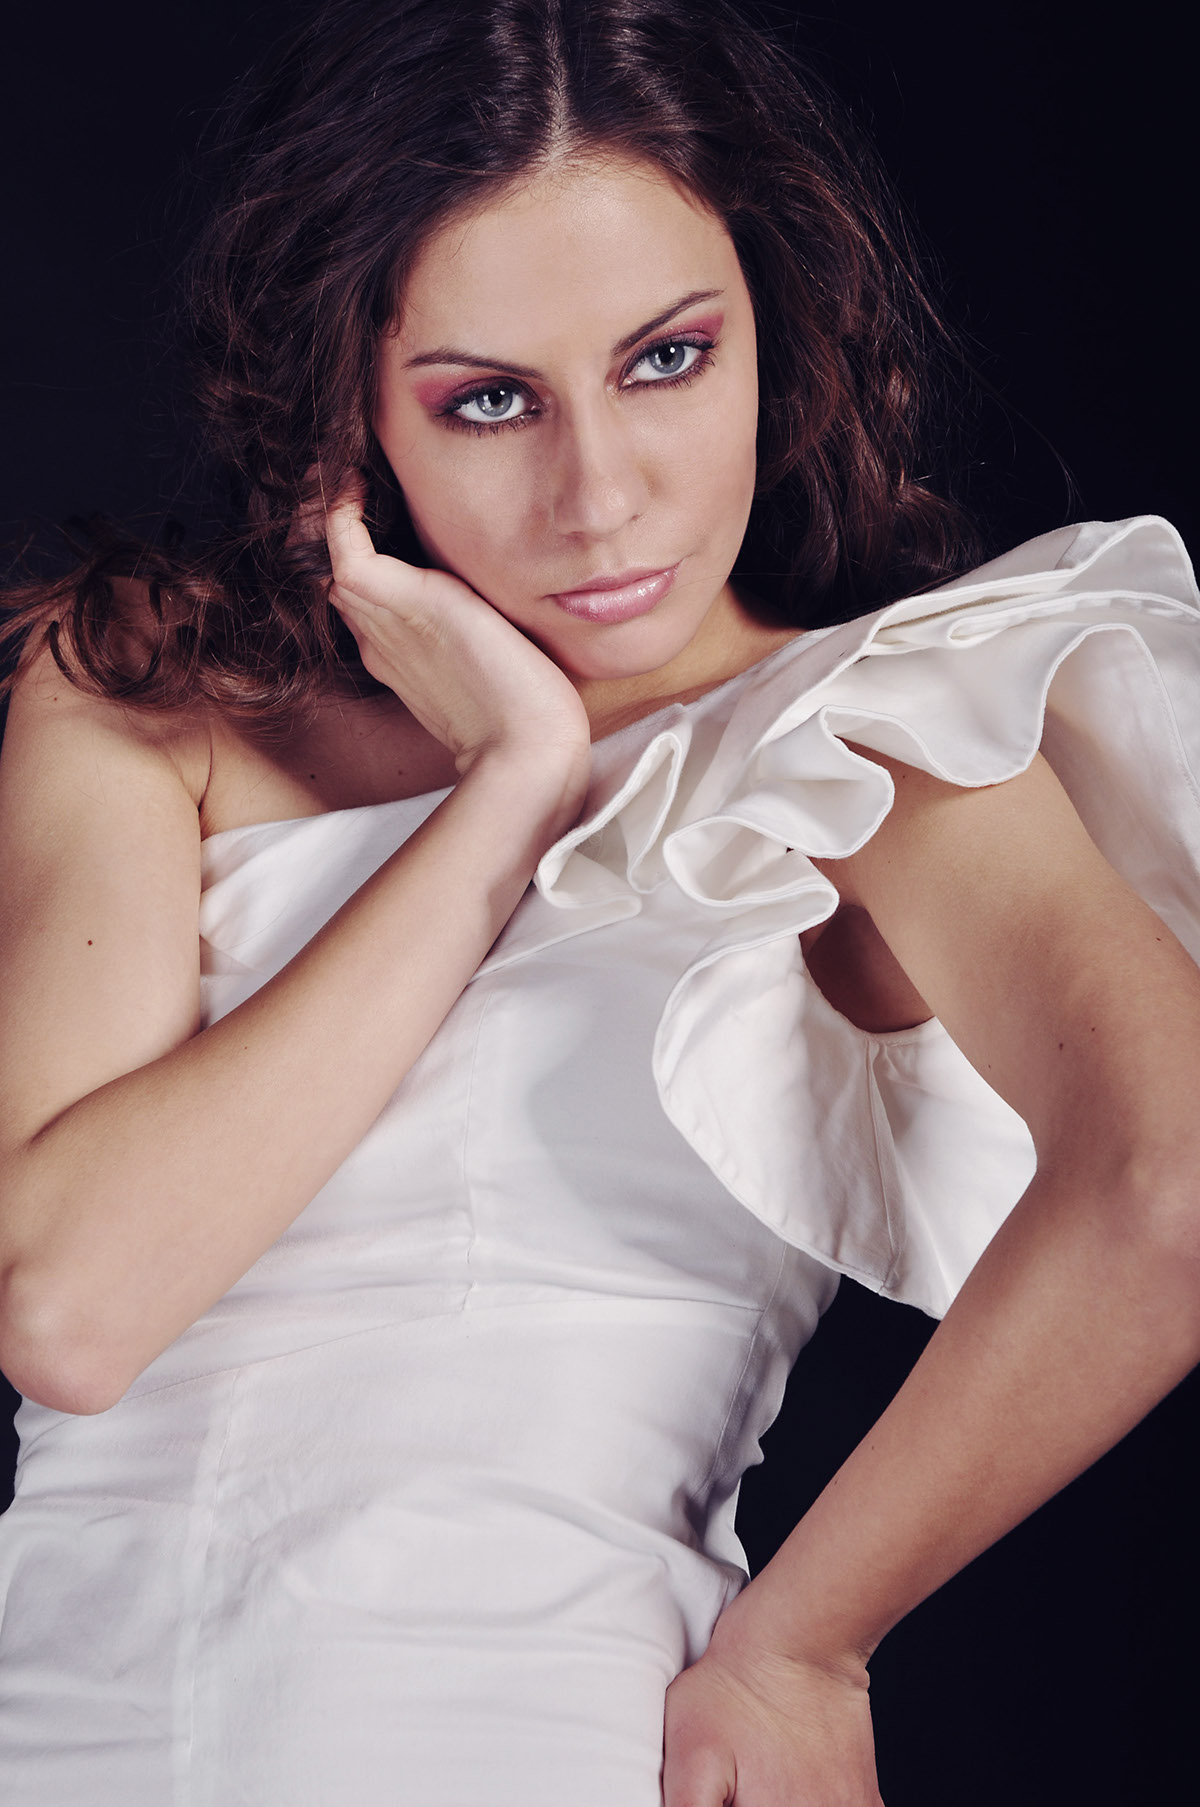 venus studio lighting sofia hassan model portrait Portraiture woman beauty